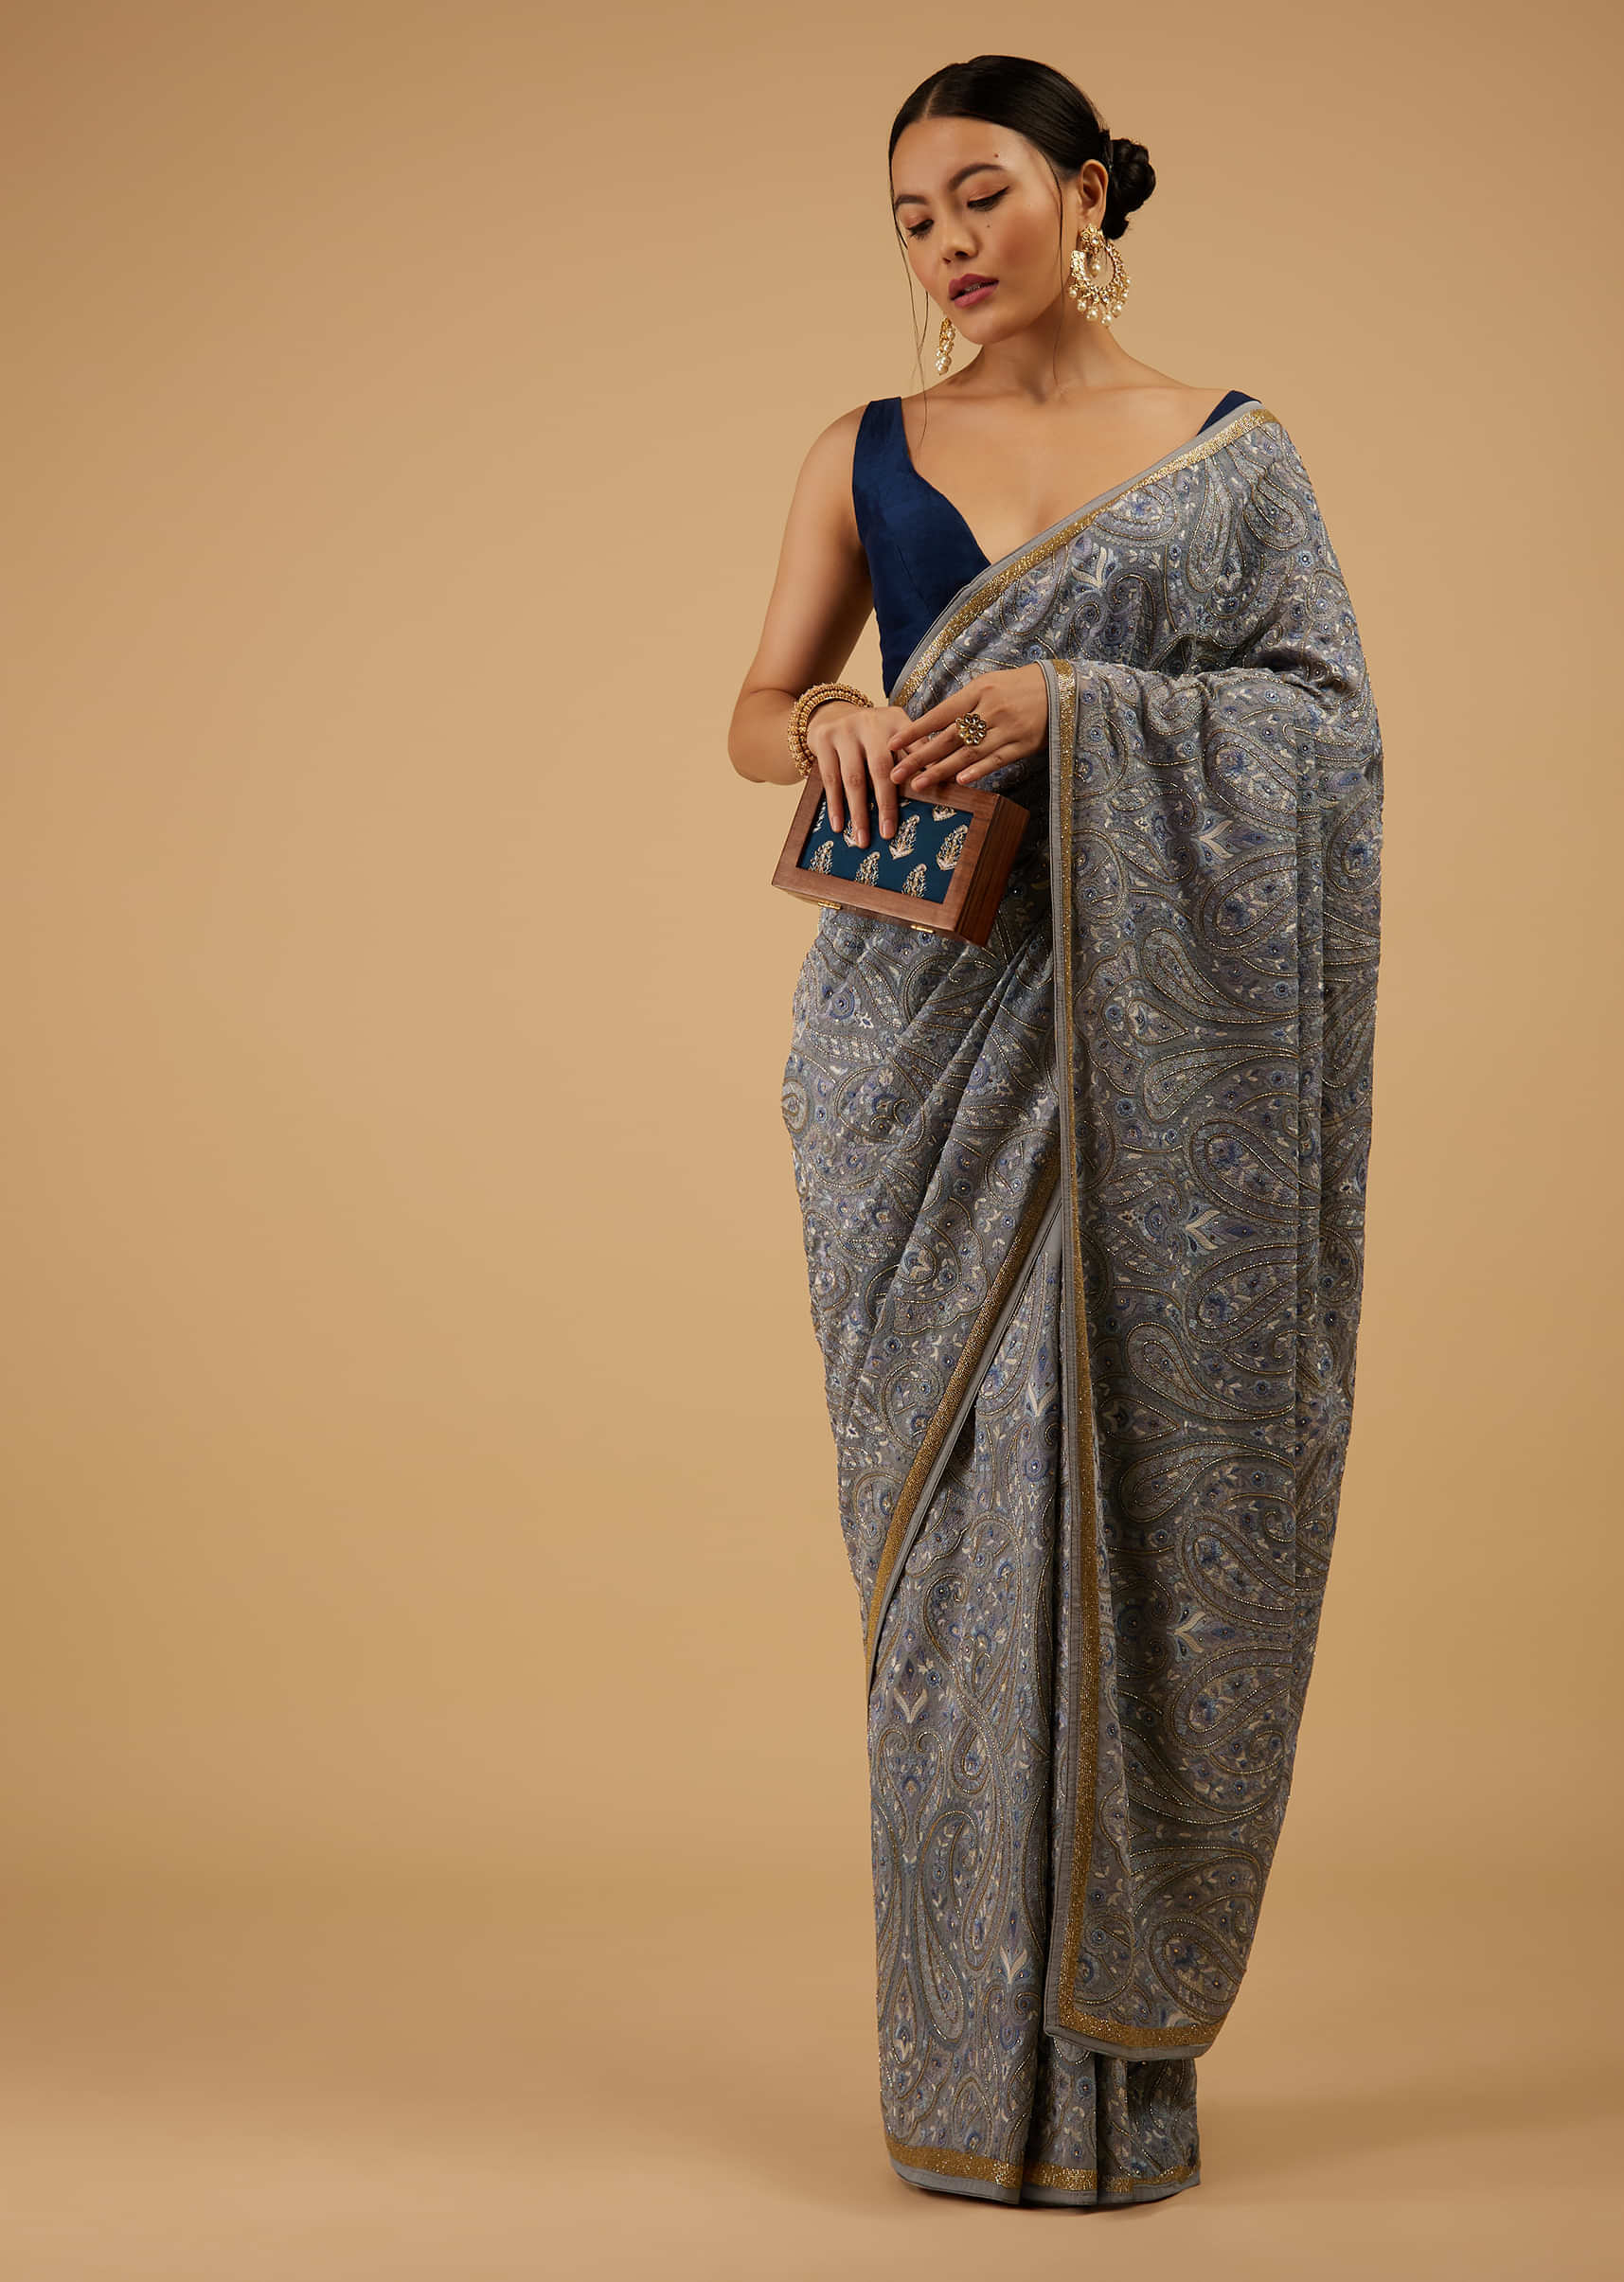 Designer Indian Georgette Embroidered Saree, Navy Blue Saree, Wedding Saree  for Women, Traditional Saree -  Finland